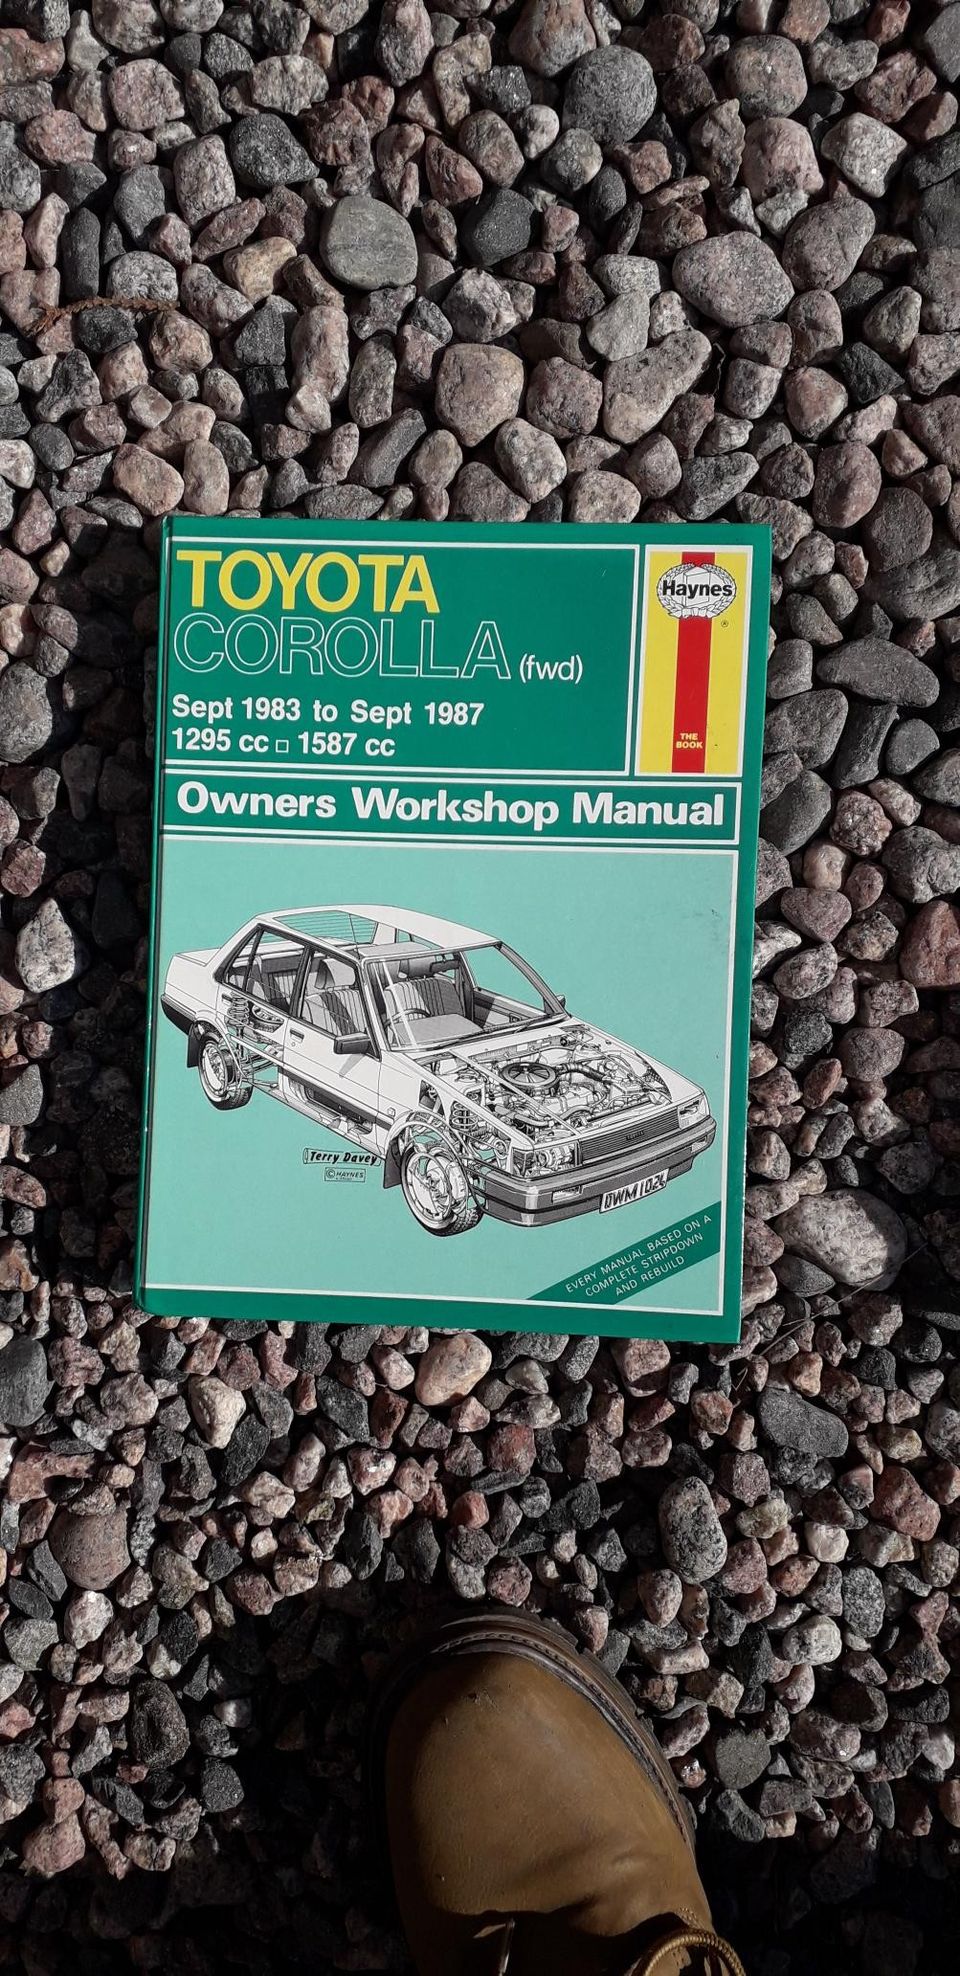 Toyota korjausopas 1983-1987